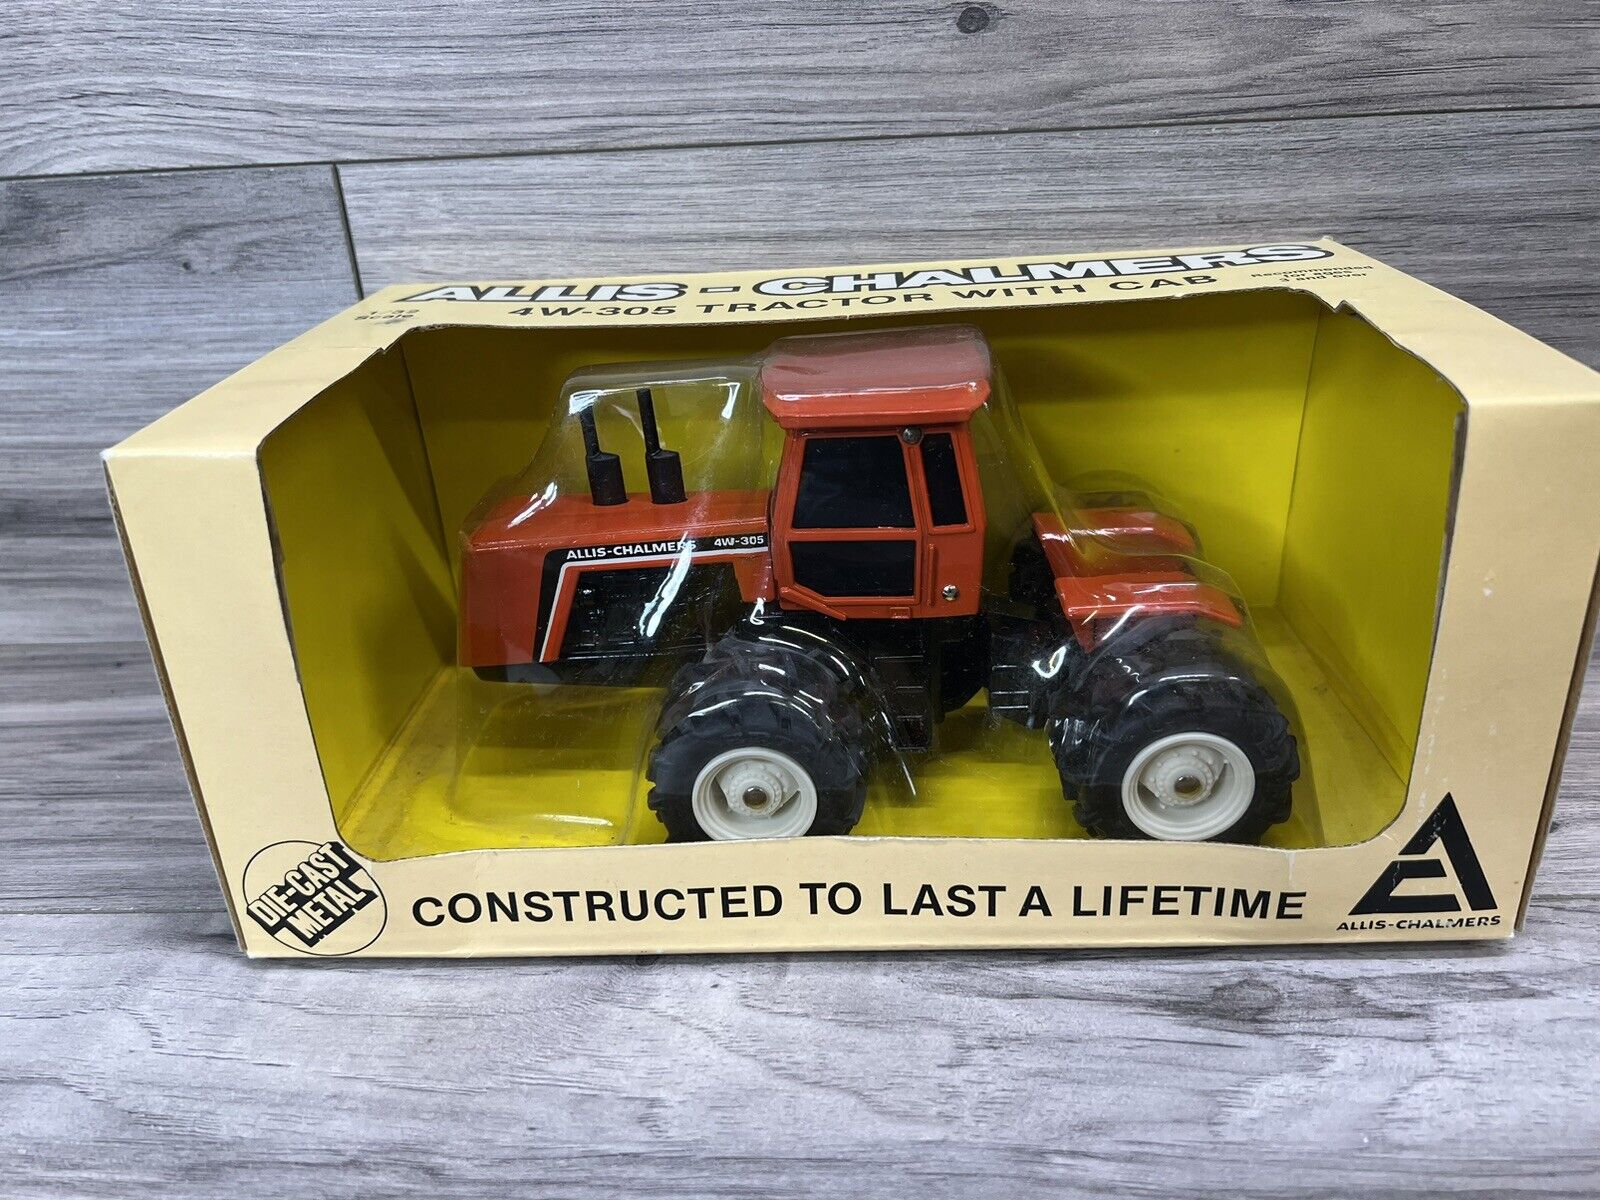 🔥Ertl Allis Chalmers 4W-305, 1/32 diecast farm tractor Toy Model RARE NEW NOS